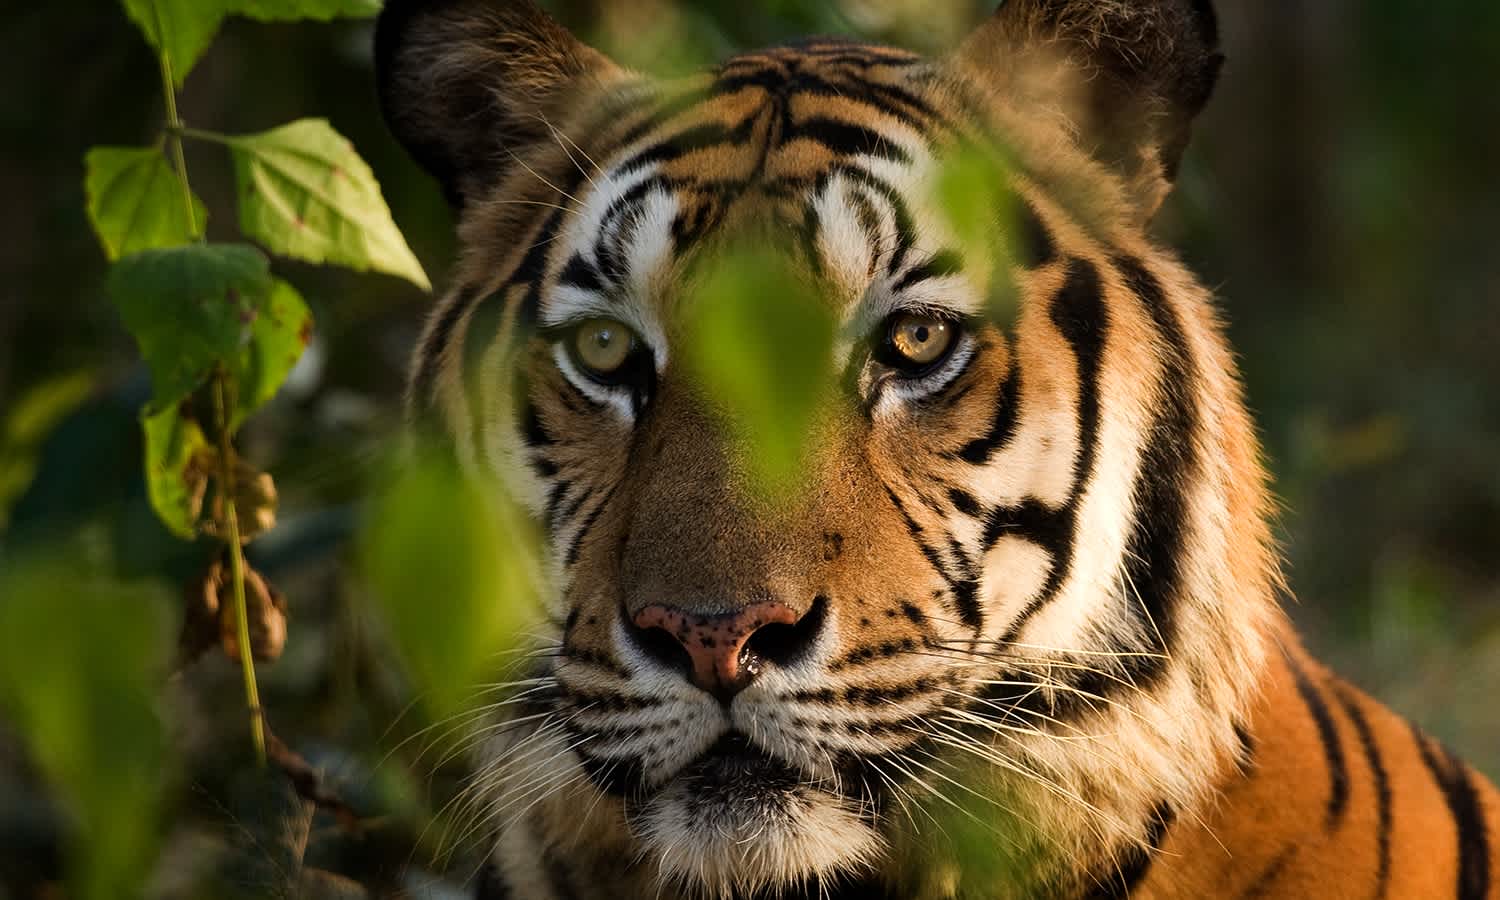 Fauna & Flora safeguards iconic wildlife like the Sumatran tiger, mountain gorilla and Asian elephant